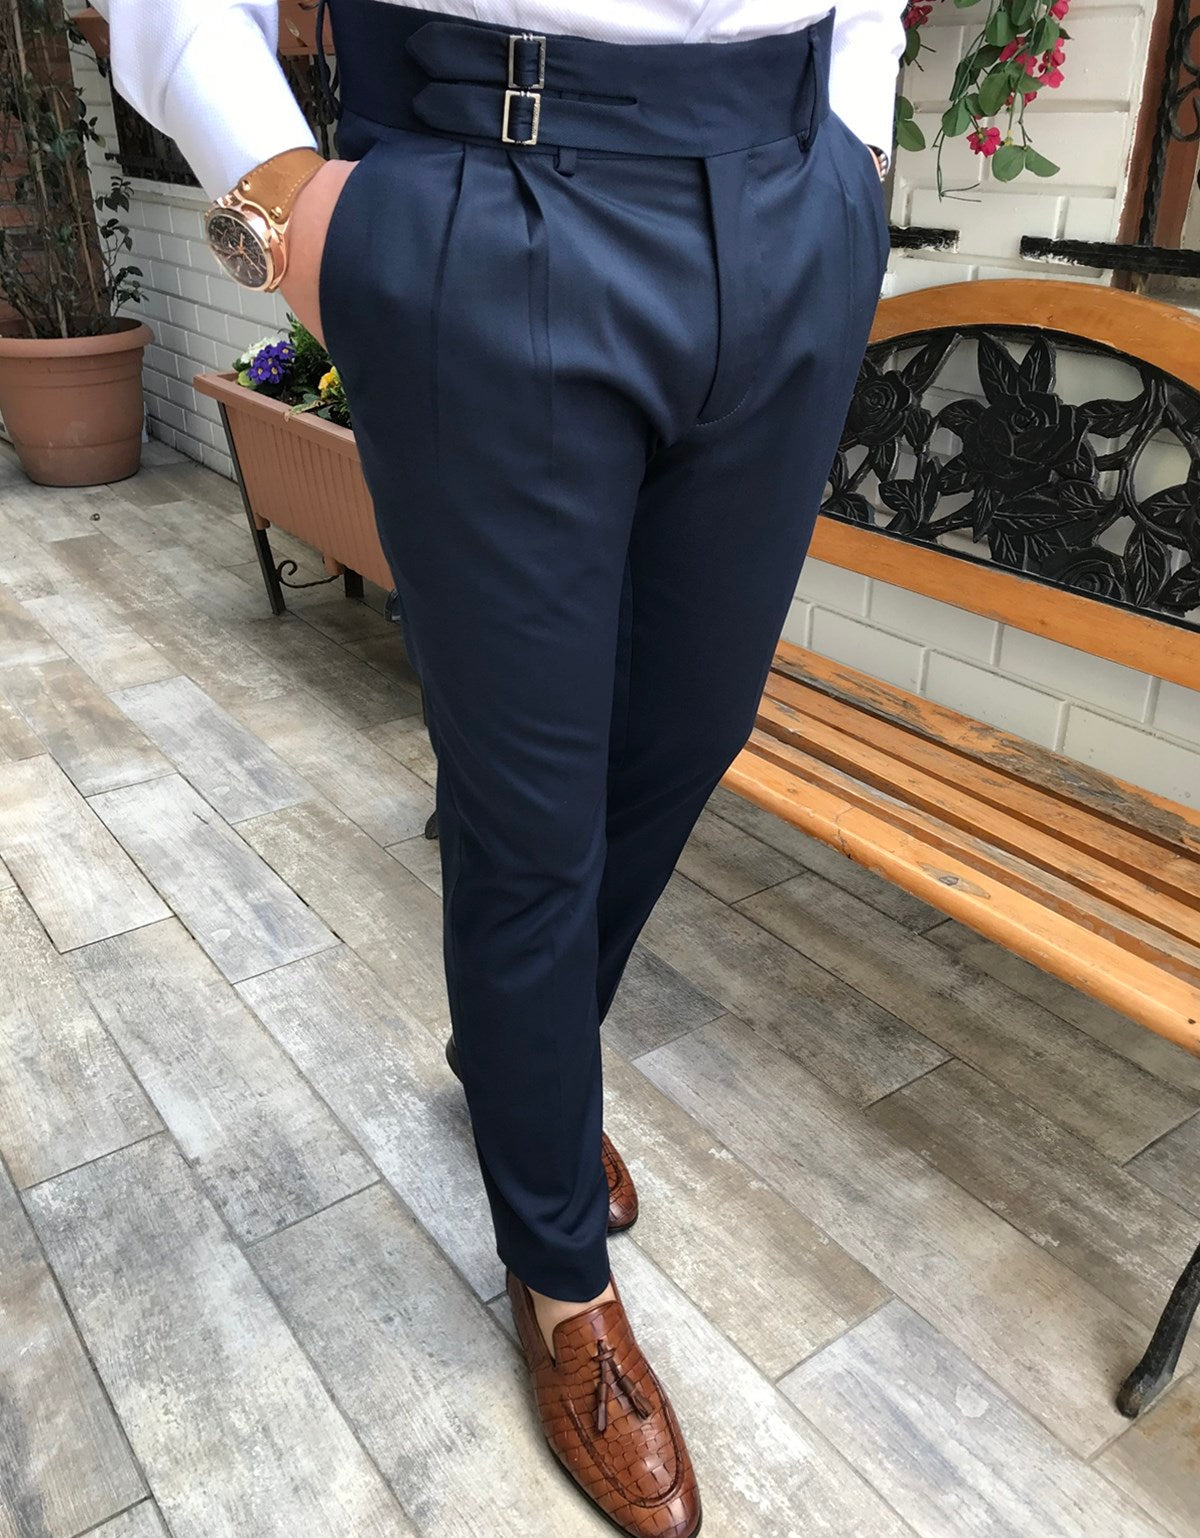 2020 New Pure Color Men's Formal Suit Pants Black Red Navy Blue Gray Size  29 30 31-38 Slim Fit Men Business Casual Trousers